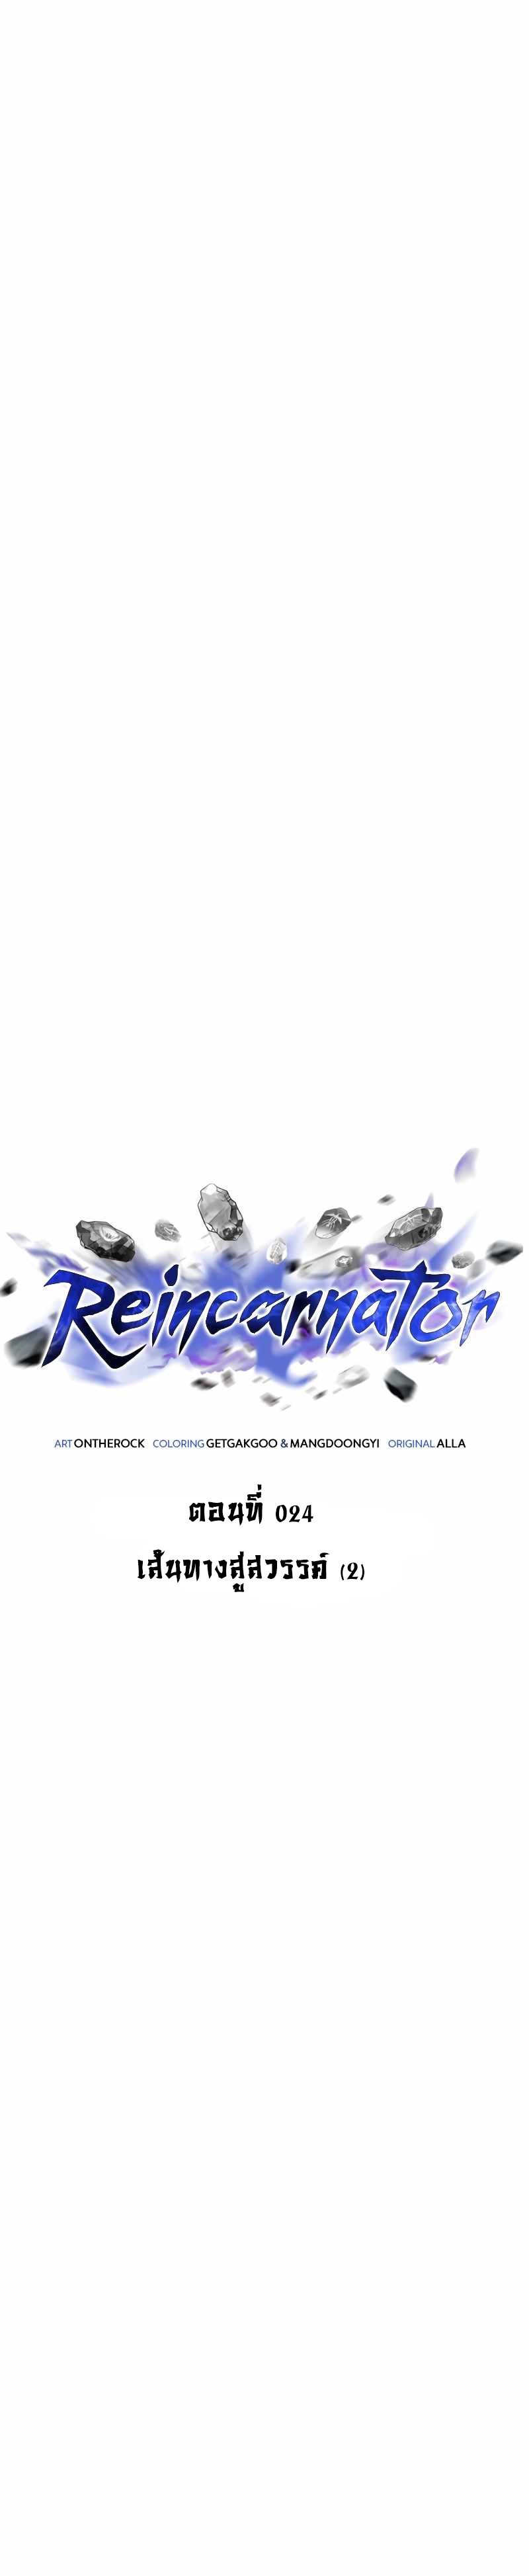 Reincarnator 24 (1 3)